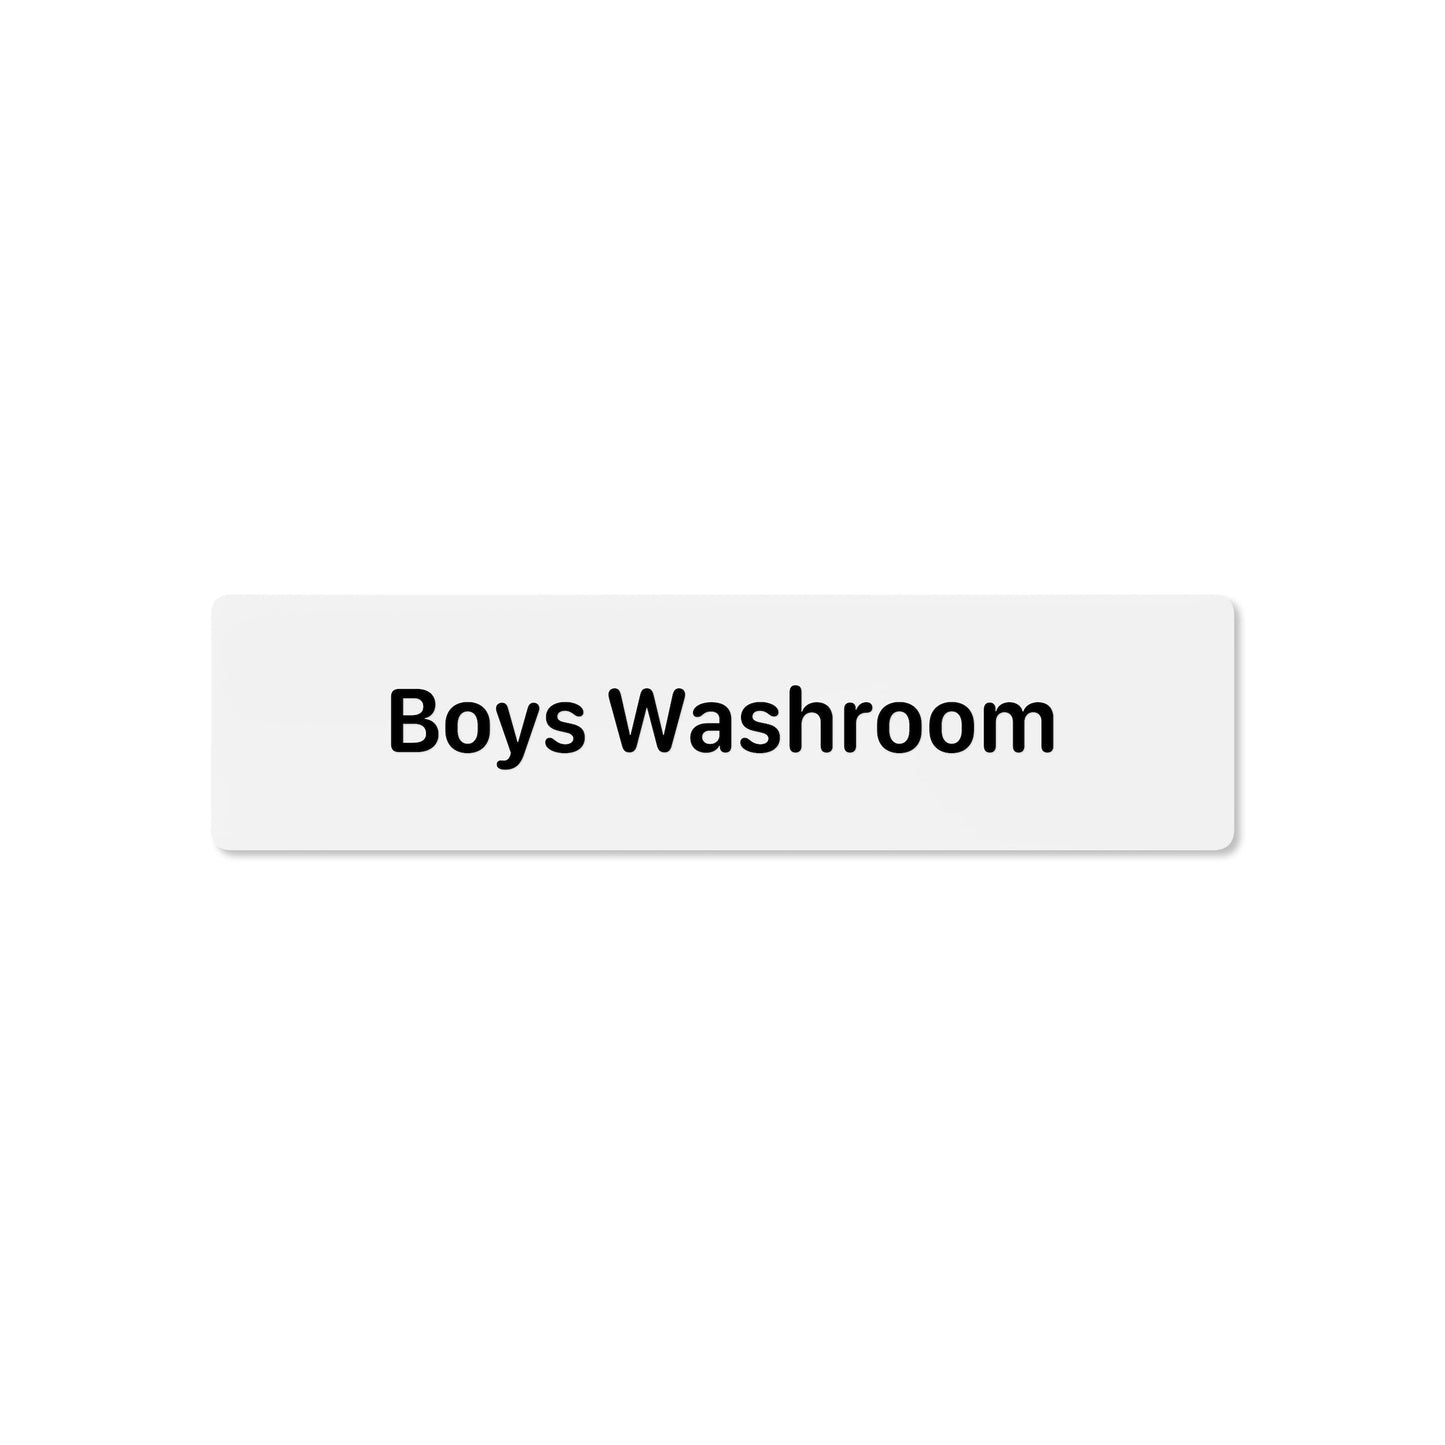 Boys Washroom